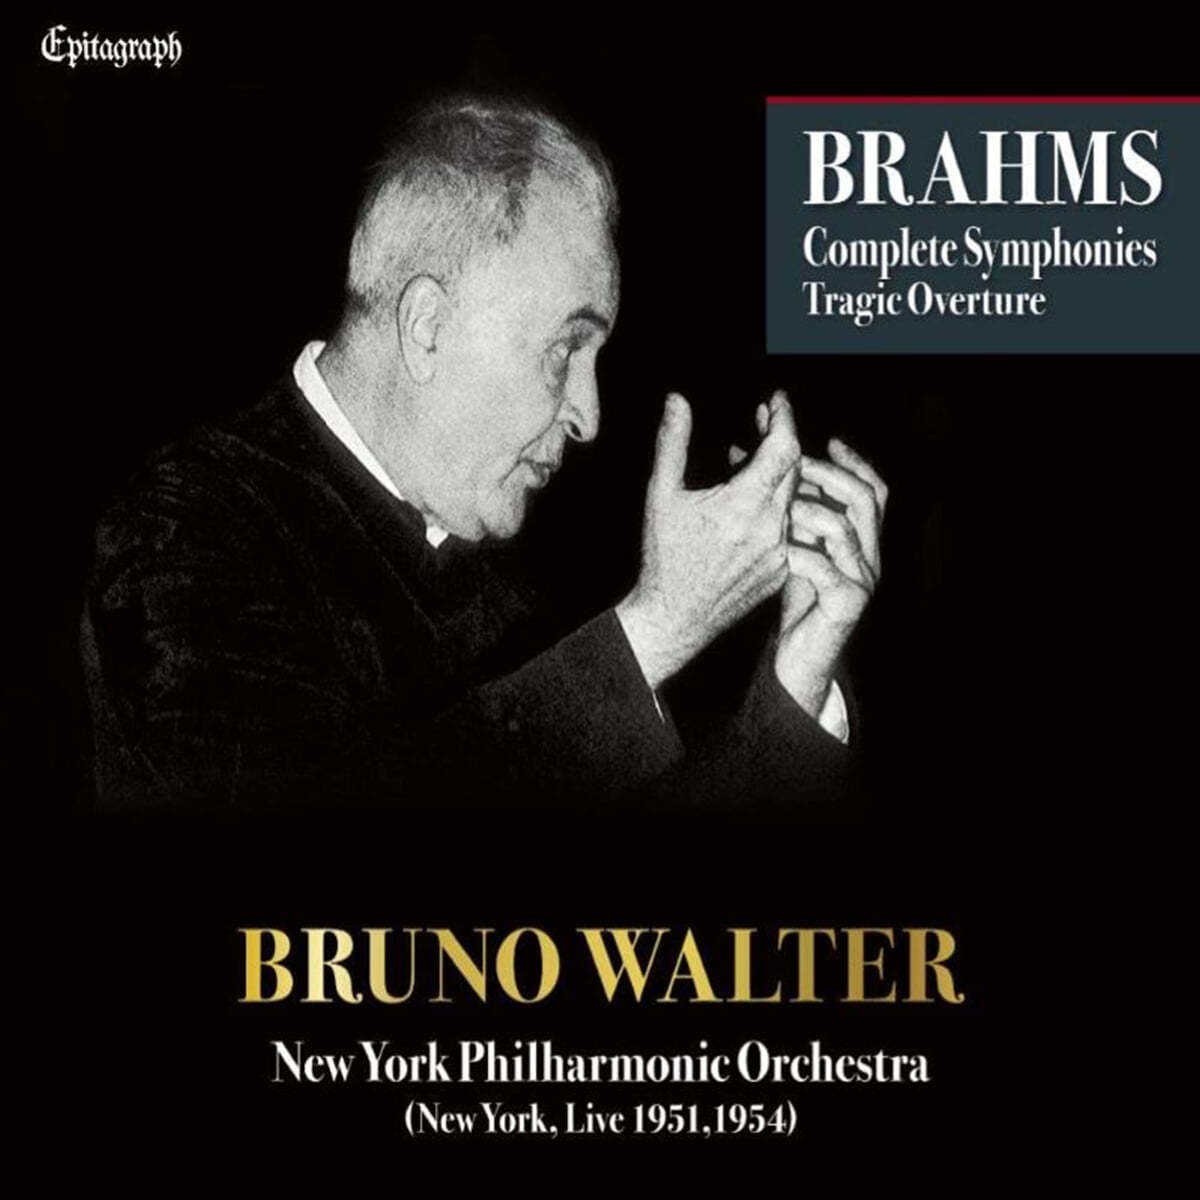 Bruno Walter 브람스: 교향곡 전곡집 - 브루노 발터 (Brahms: Complete Symphonies)